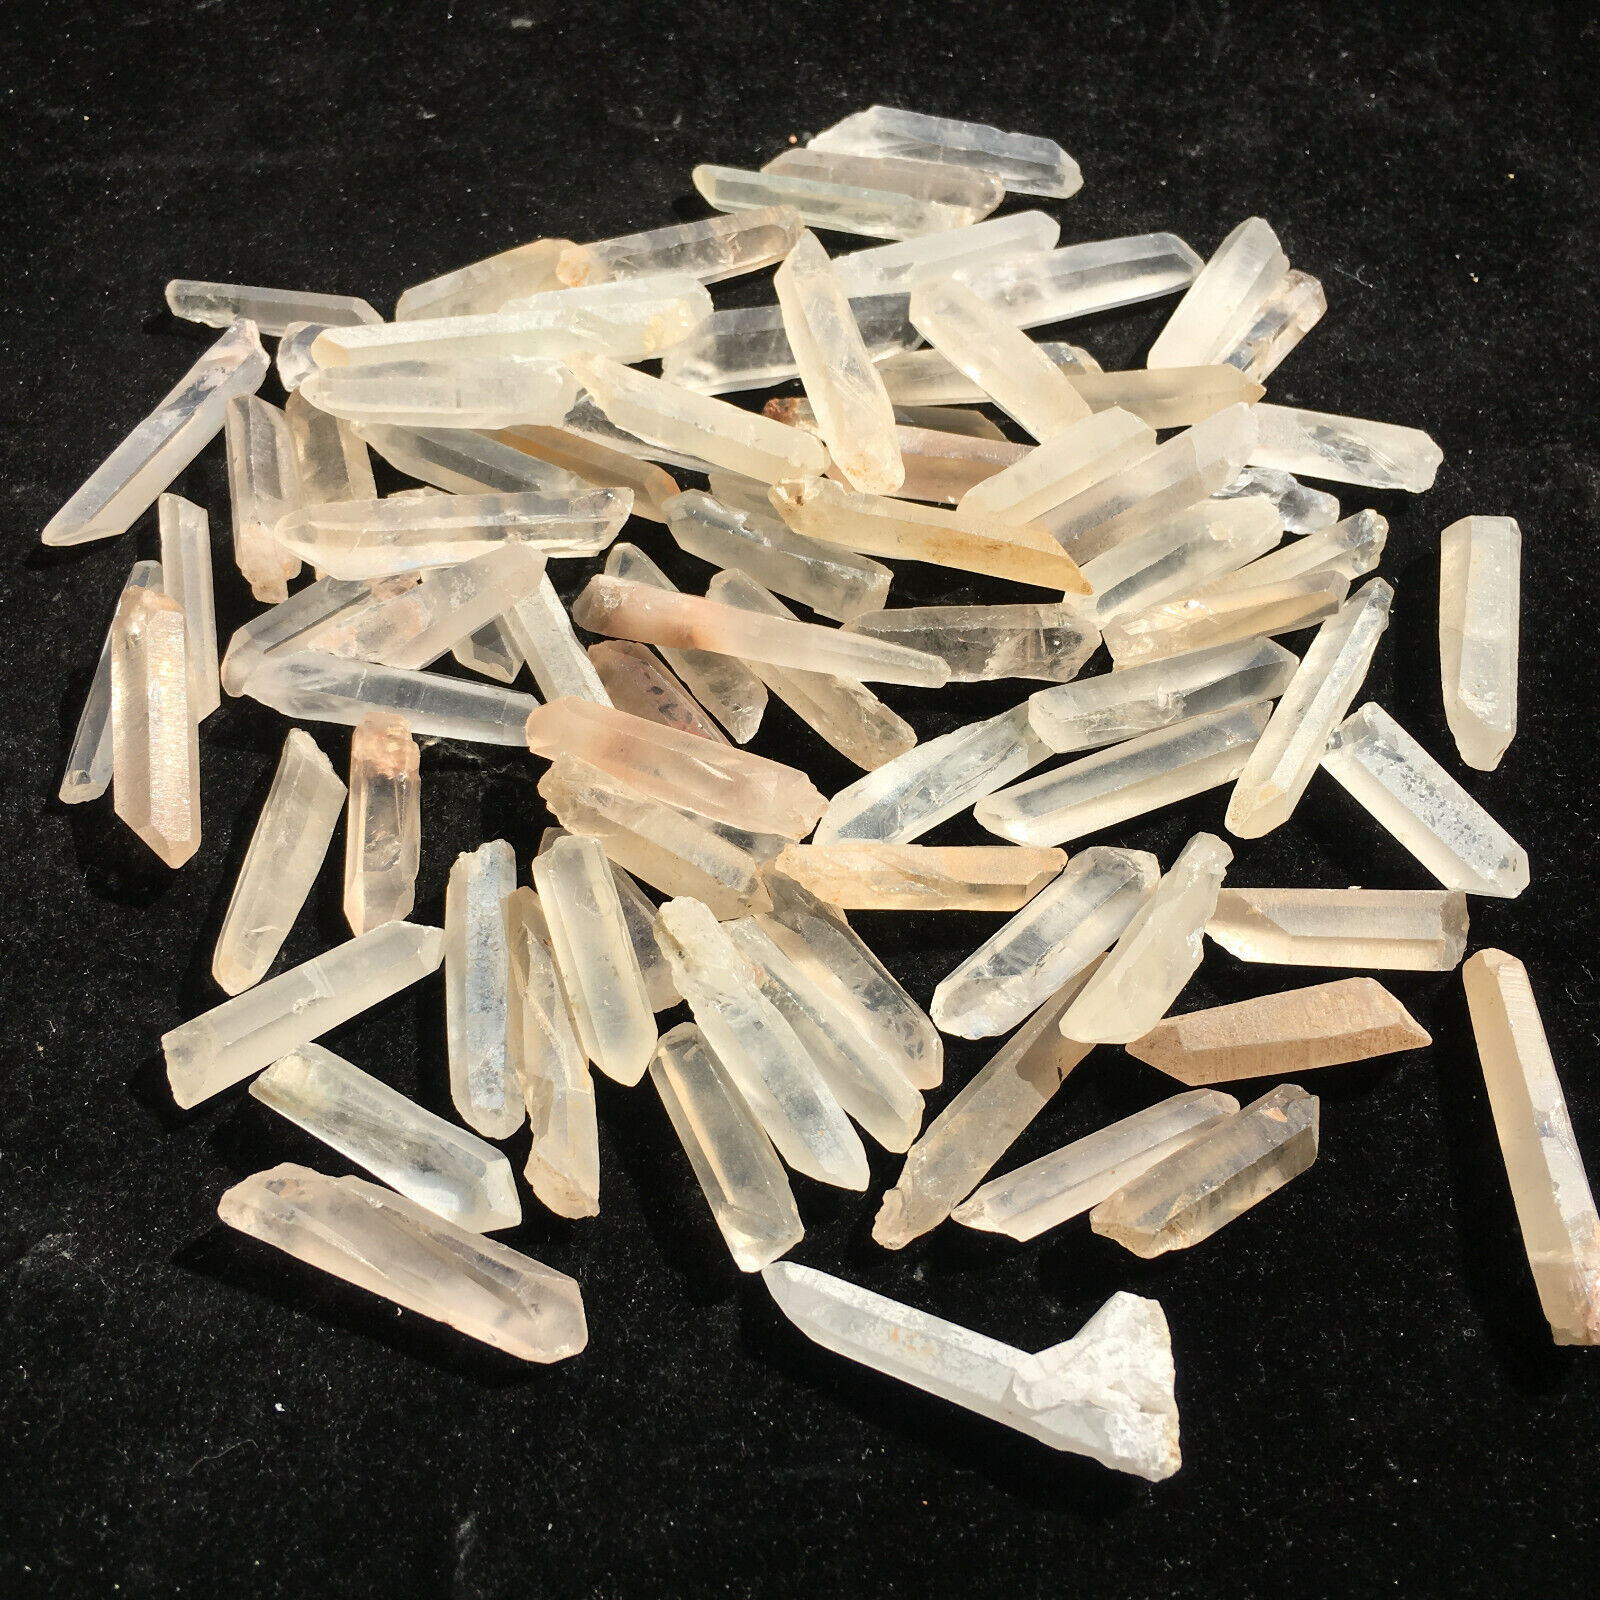 50g+ Lot Lemurian white Quartz Crystal Point Terminated Waand Specimen